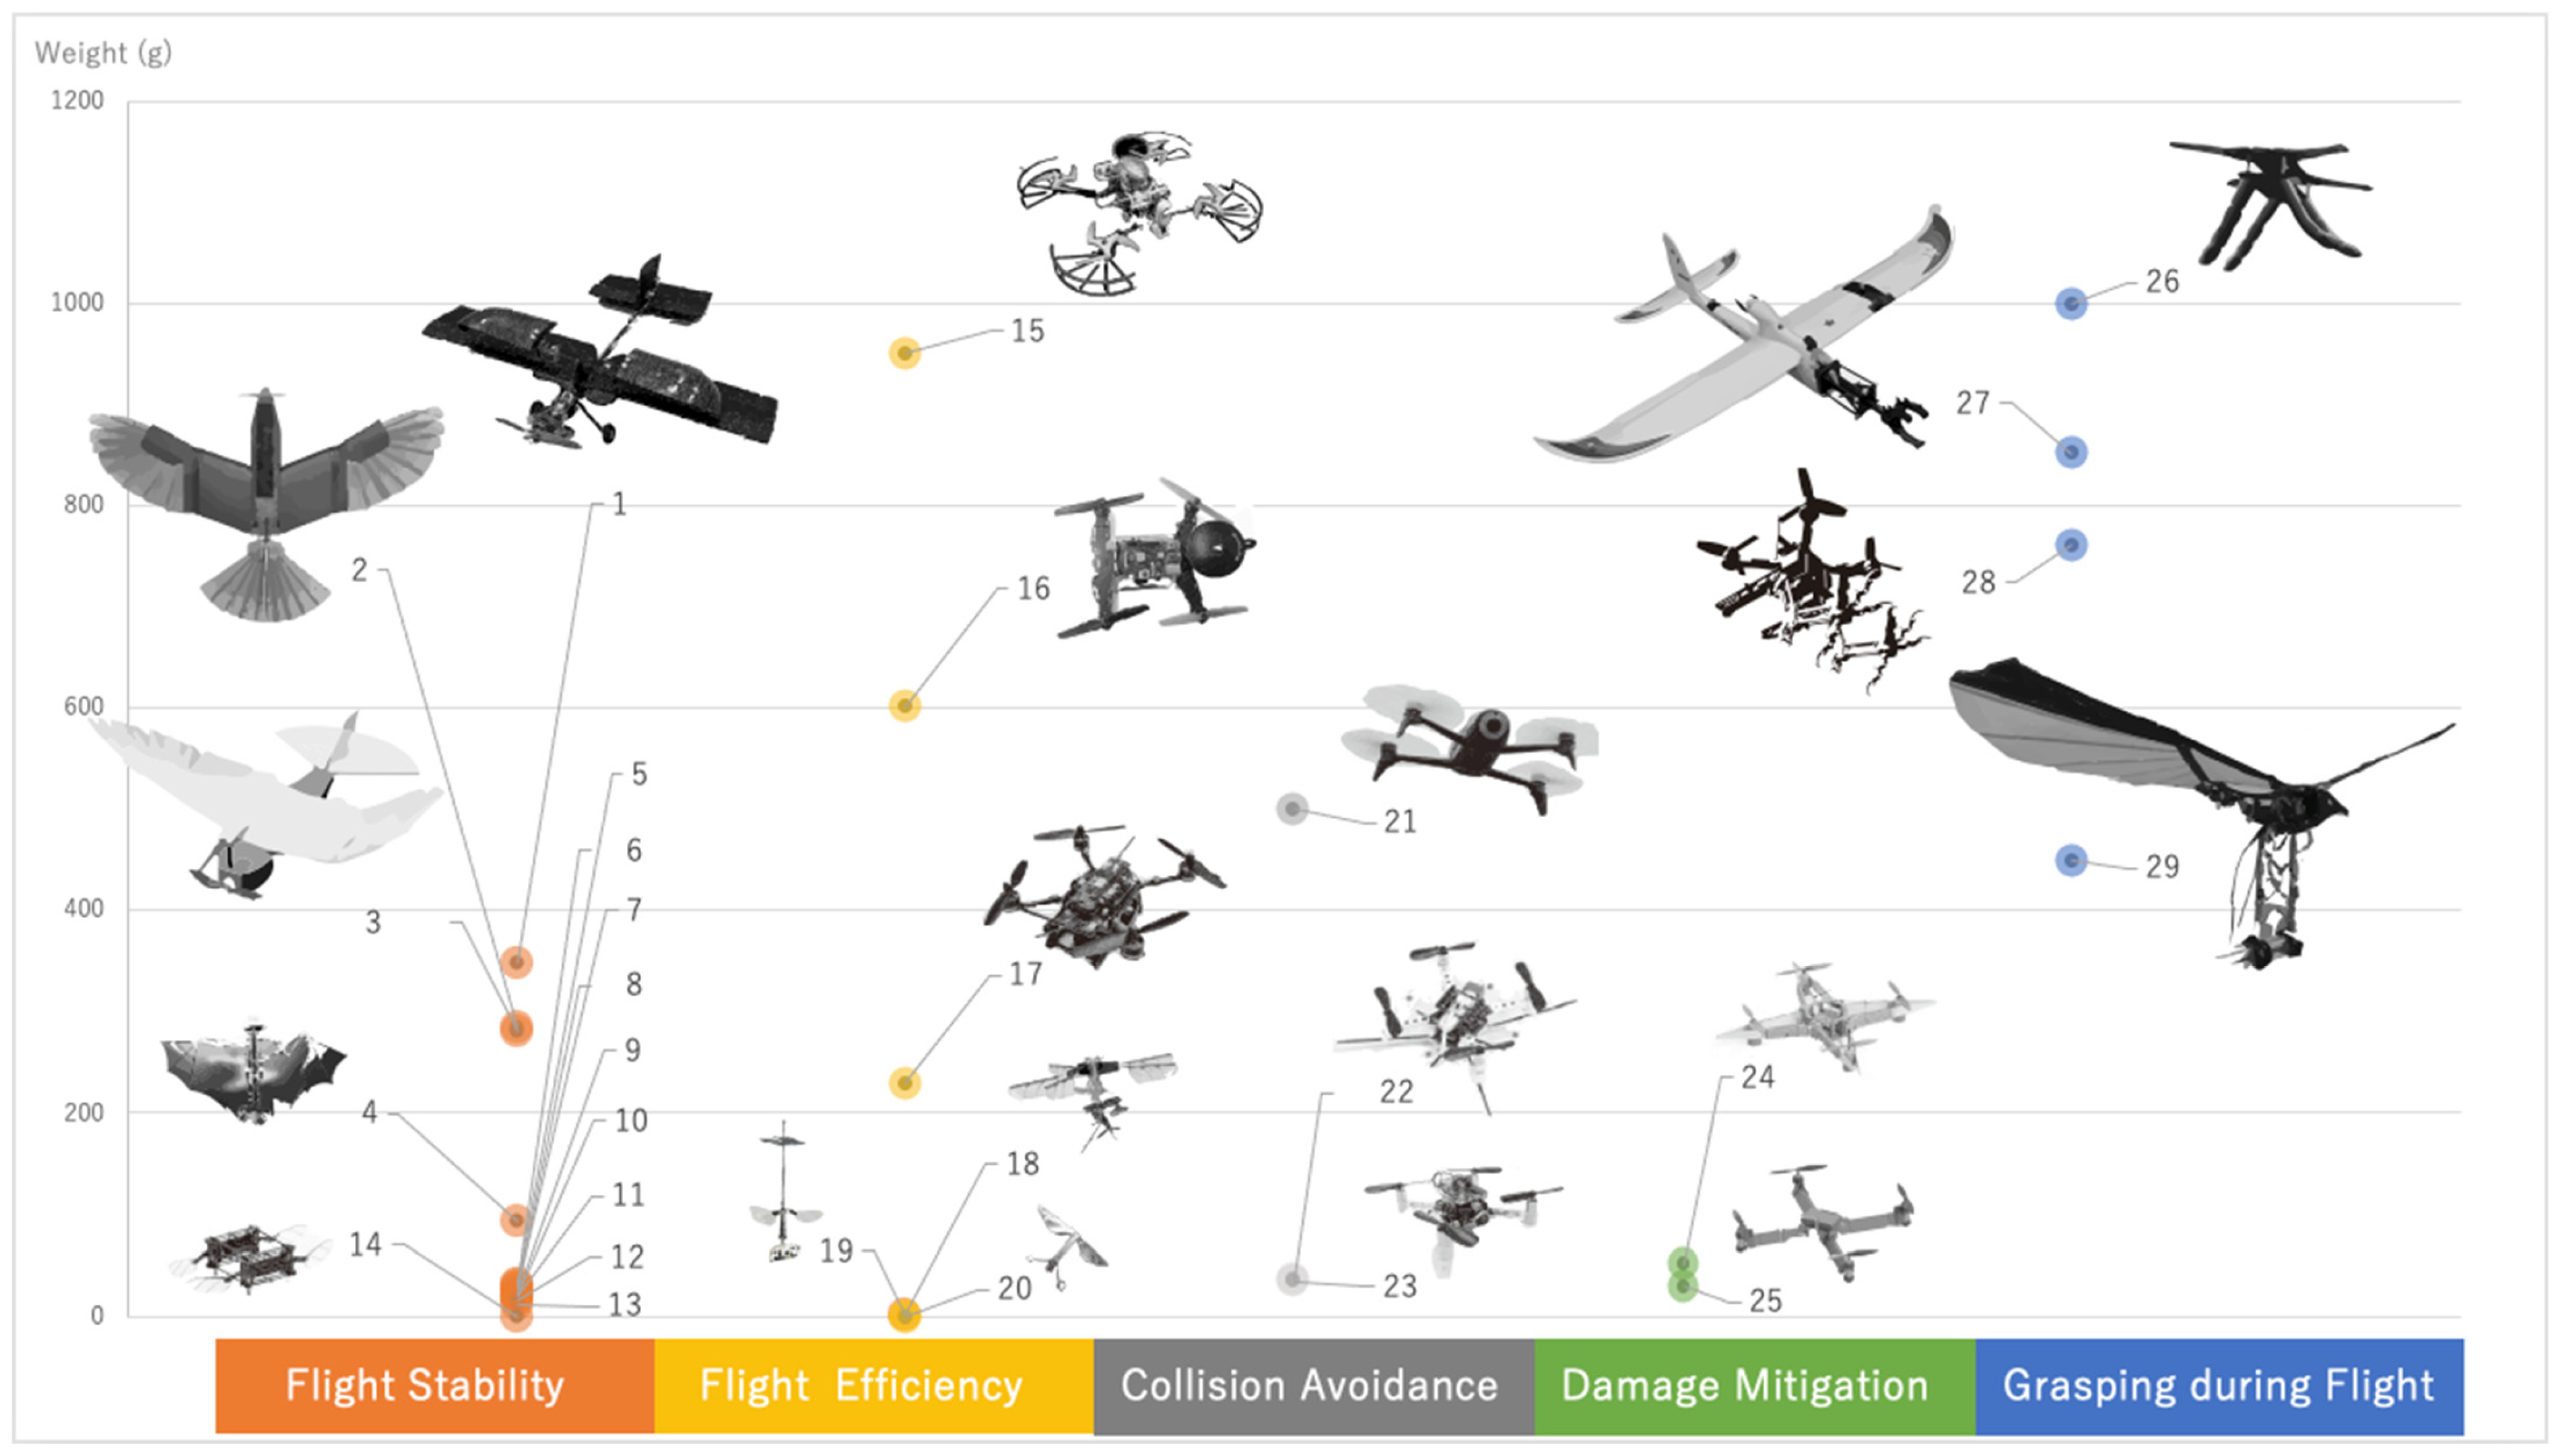 Vols de drones en milieu naturel : quels sont les impacts ? - Drone  University